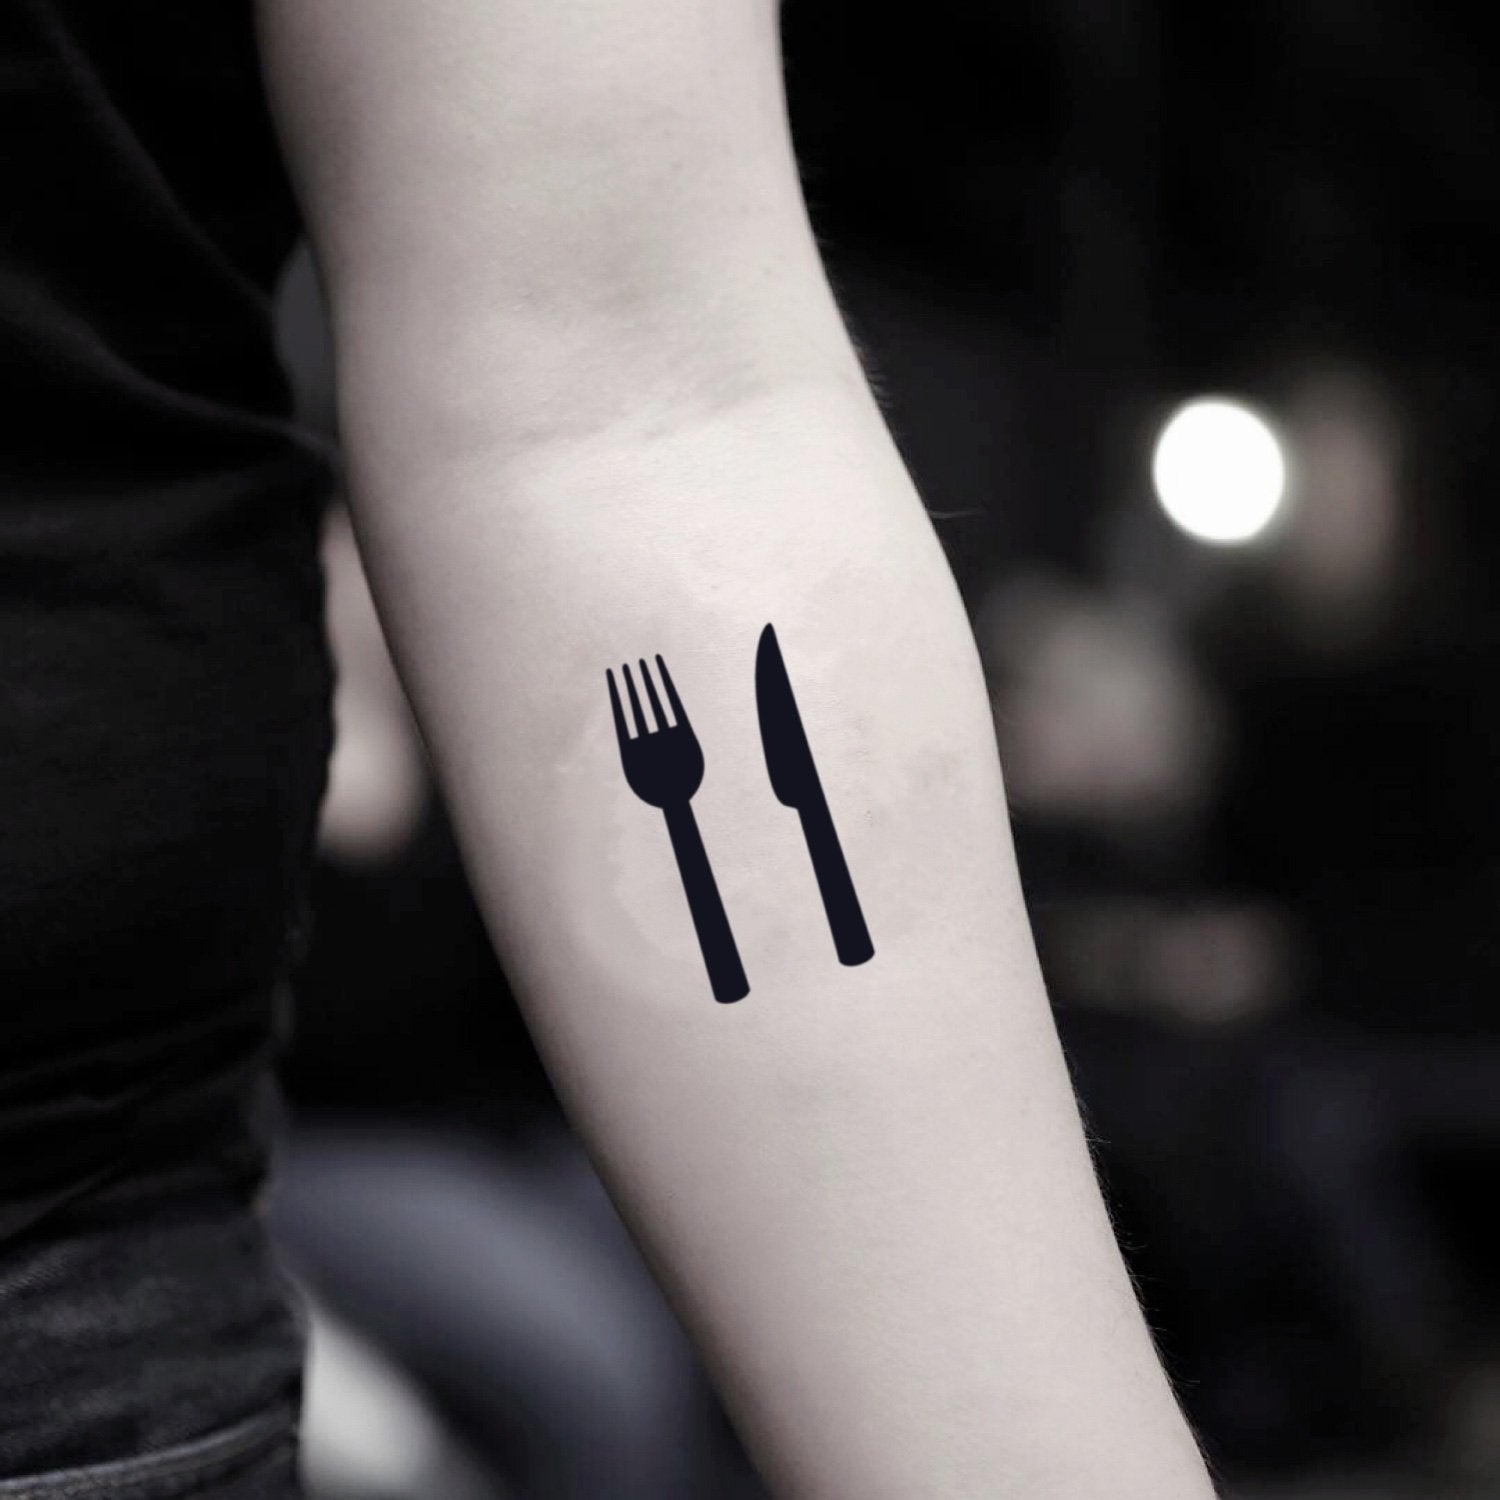 fake small fork food kitchen tools minimalist temporary tattoo sticker design idea on inner arm